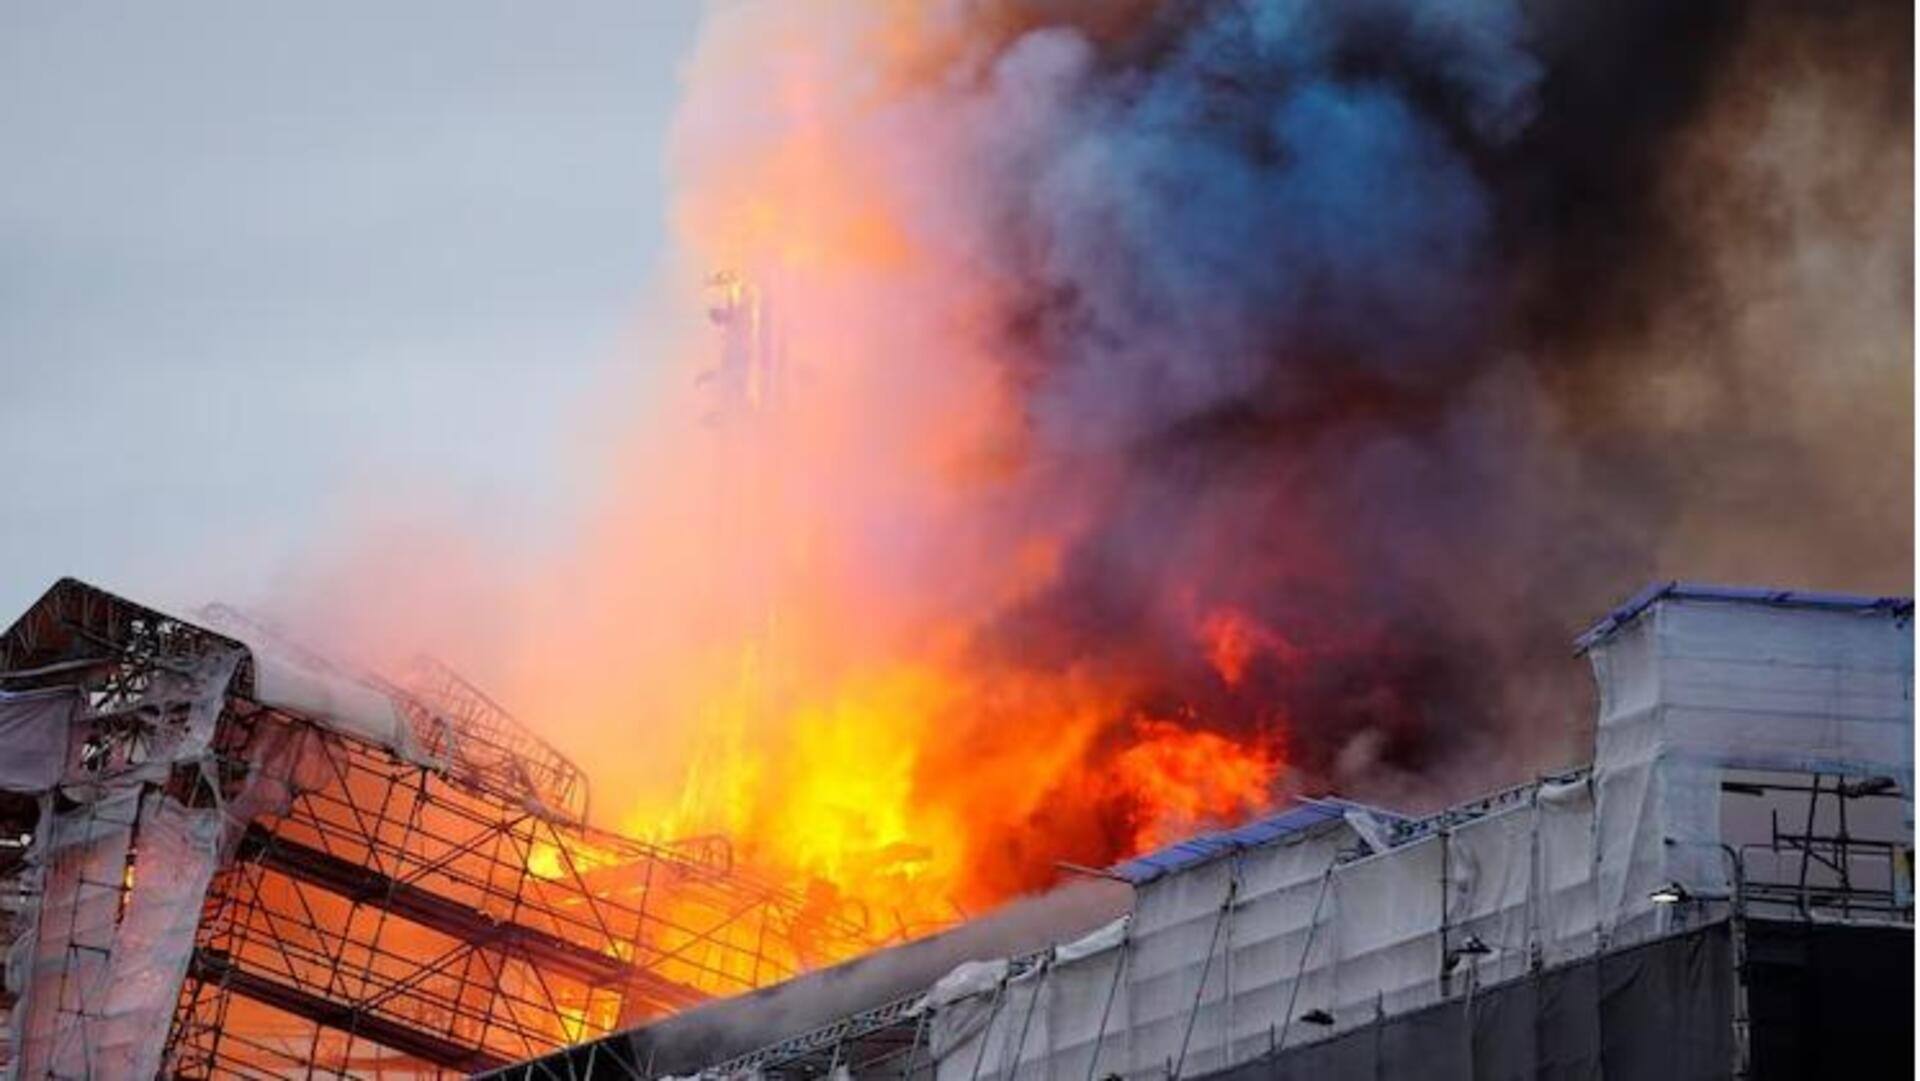 Fire engulfs Copenhagen's Stock Exchange: డెన్మార్క్ లోని కోపెన్హగెన్ ఓల్ట్ స్టాక్ ఎక్చేంజ్ కార్యాలయంలో అగ్నిప్రమాదం